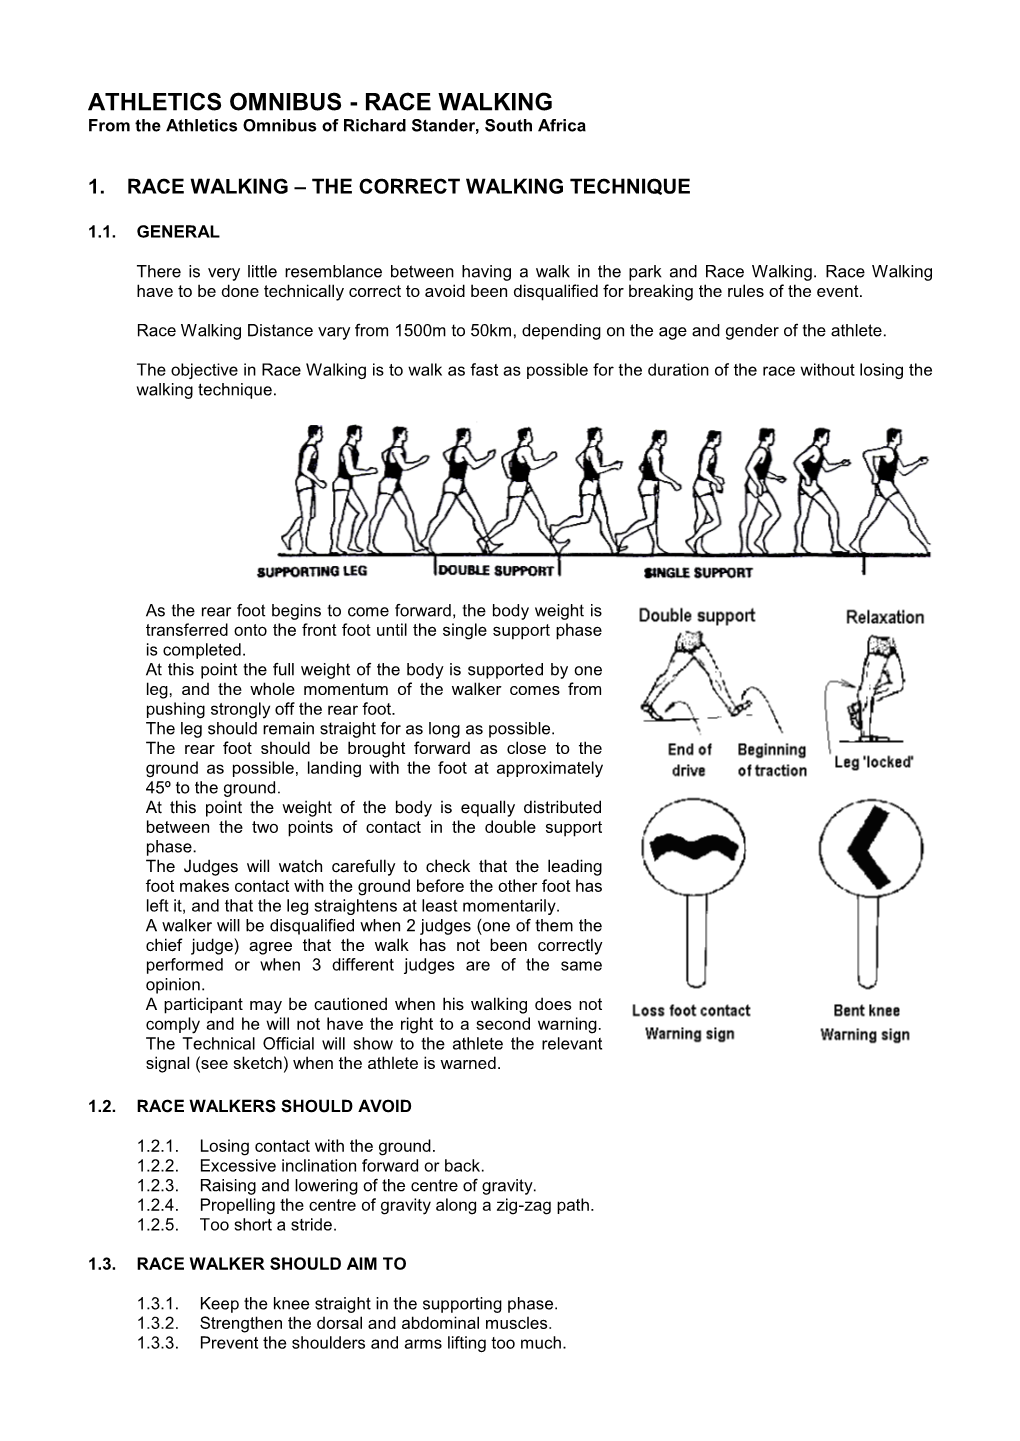 1. Race Walking – the Correct Walking Technique